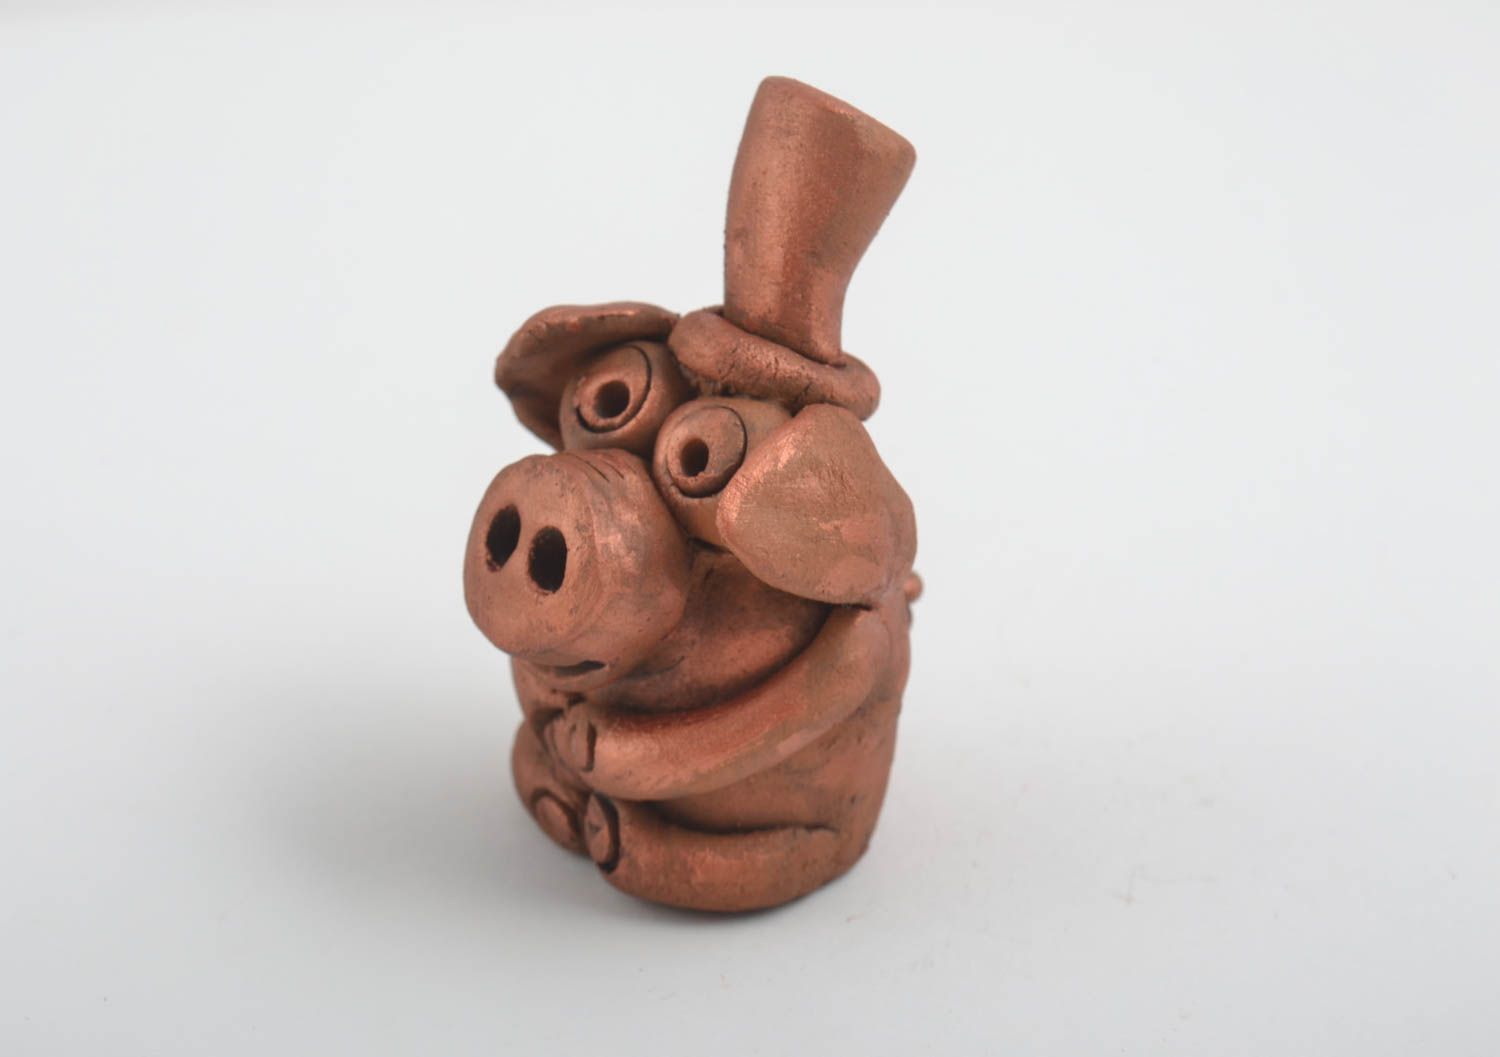 Funny handmade ceramic figurine clay statuette designs sculpture art gift ideas photo 3